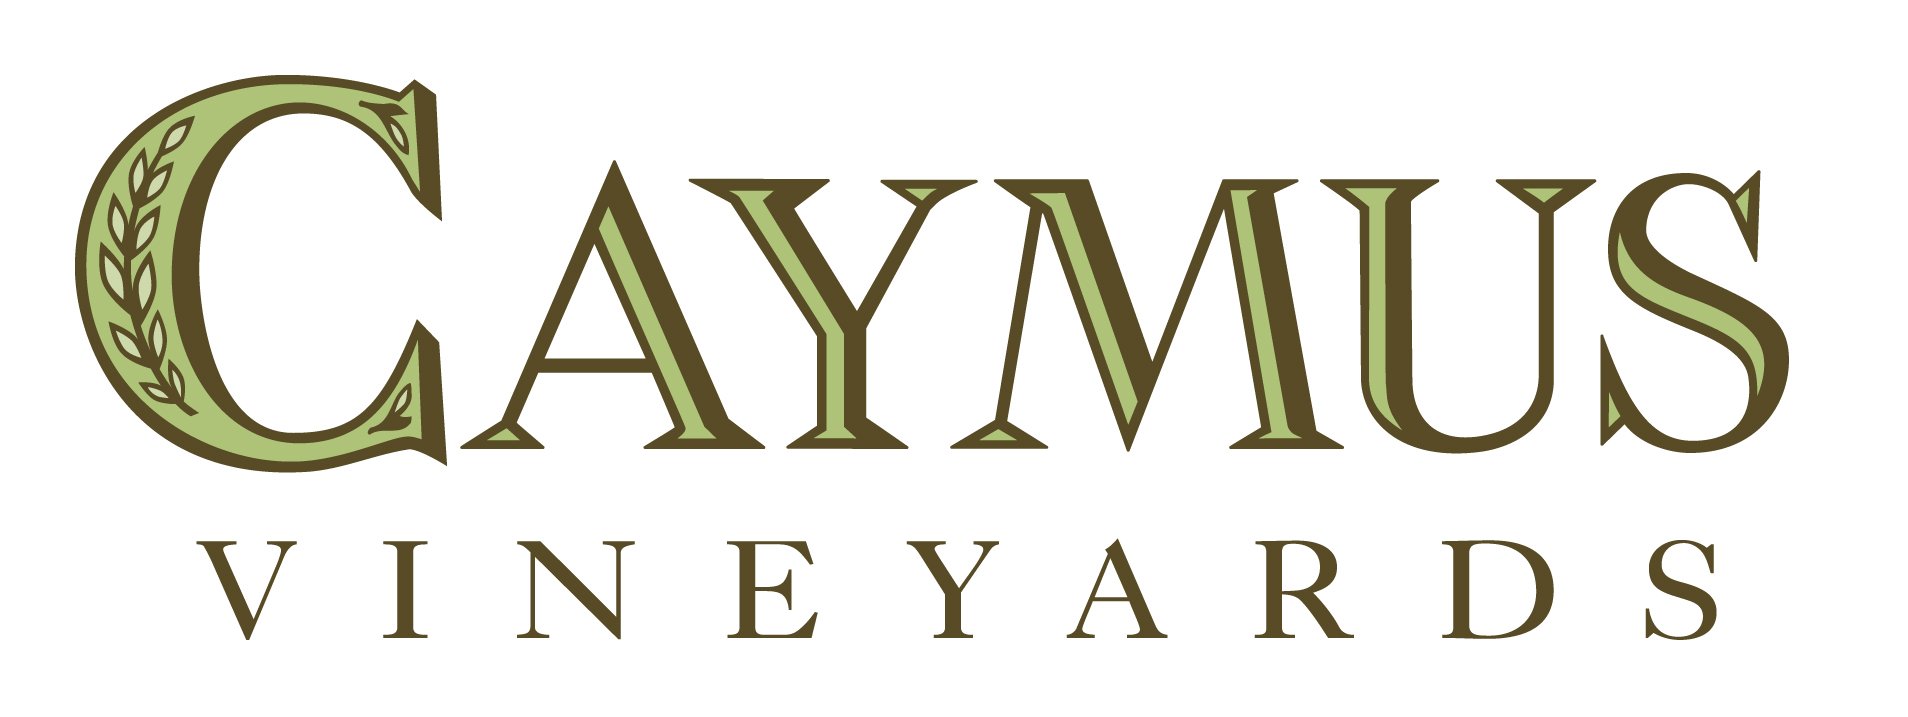 Caymus_Logo.1.jpg